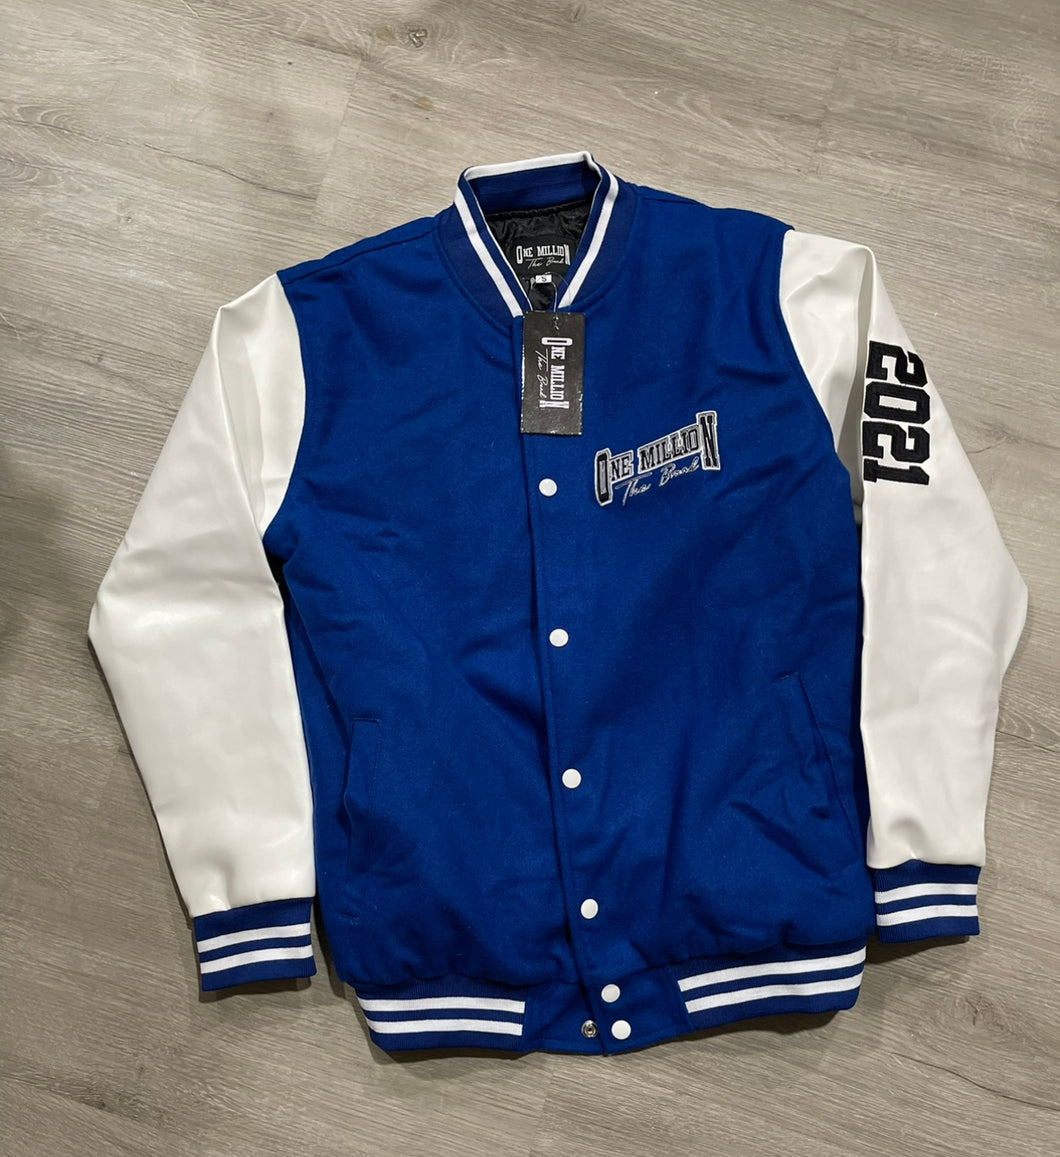 Blue/white letterman jacket